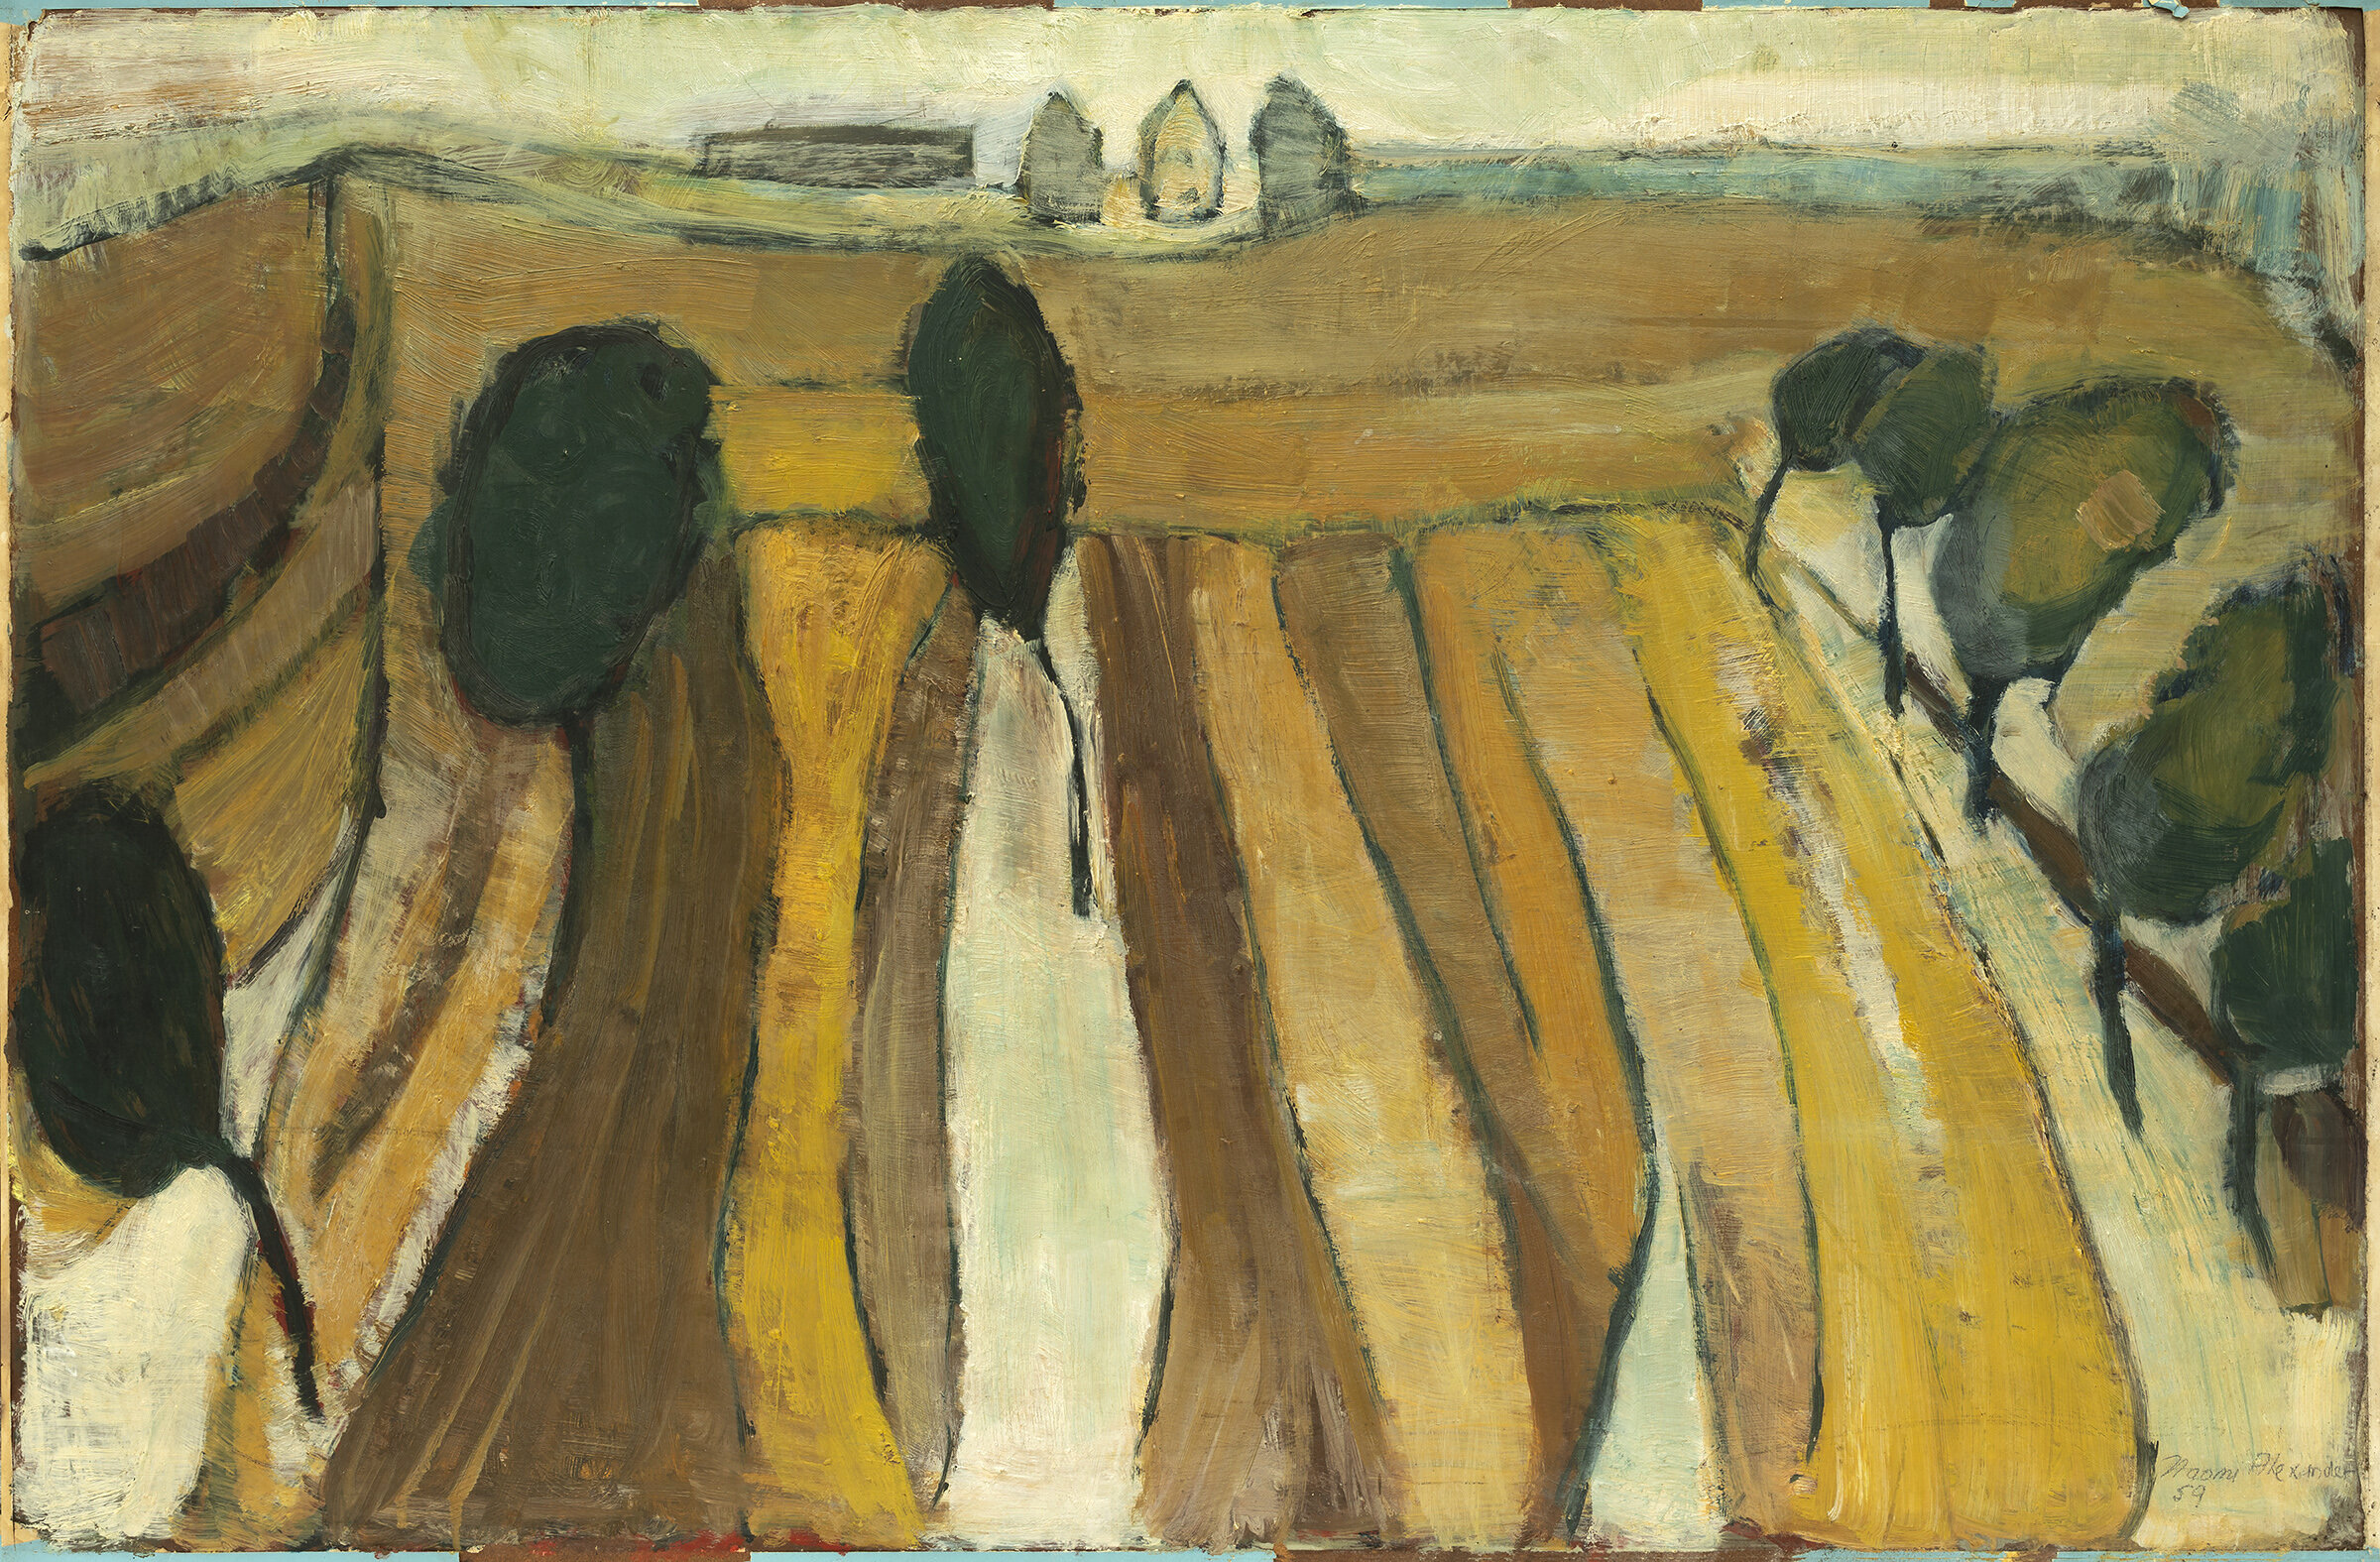 Naomi-Alexander-Cultivated Fields, 1961, oil on board, 60 x 90cm.jpg